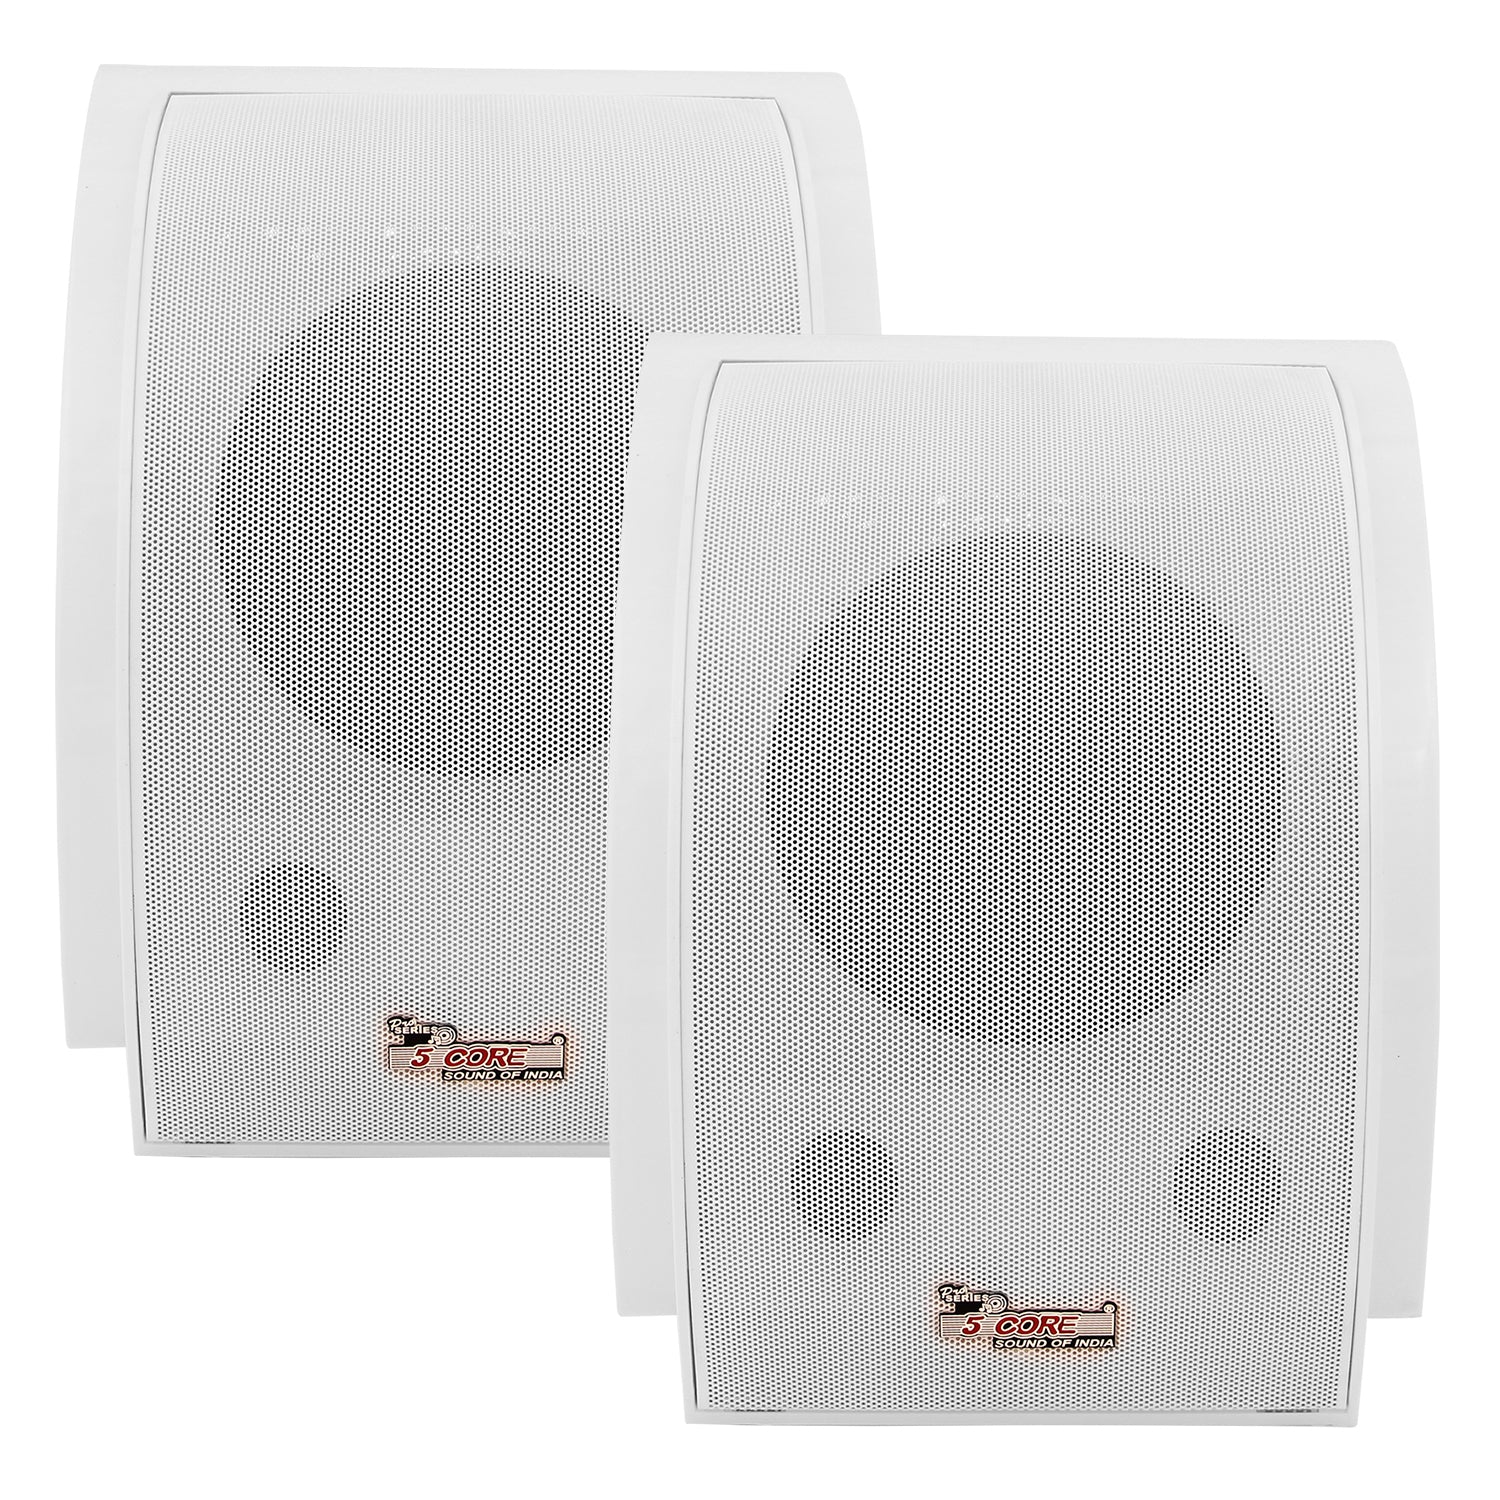 5Core Outdoor Wall Speakers 2Pack 2 Way 80W Max Power 5" Heavy Duty Waterproof Wall Mount Speakers